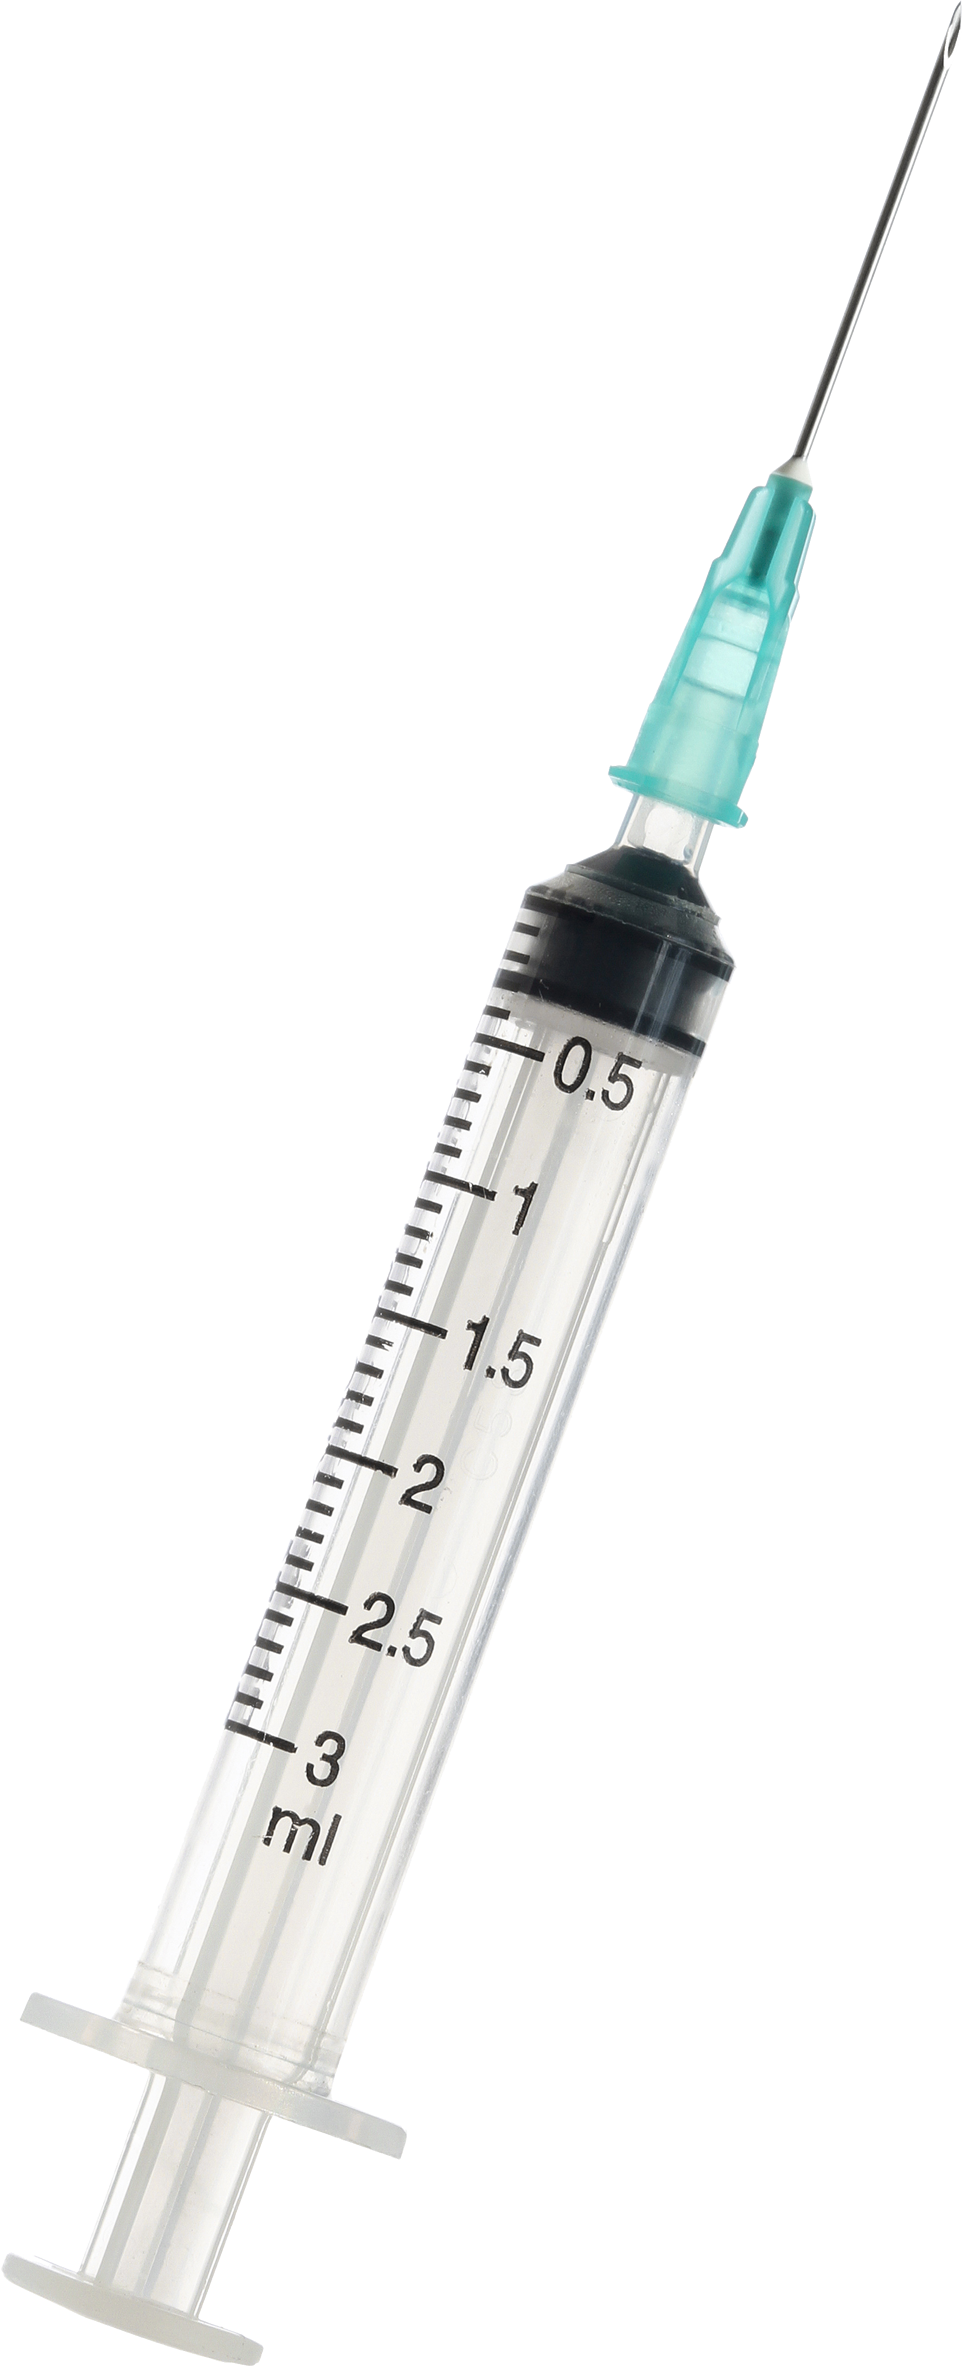 Download Needle Syringe Png Png Black And White Syringe Plastic Transparent Background Png Image With No Background Pngkey Com